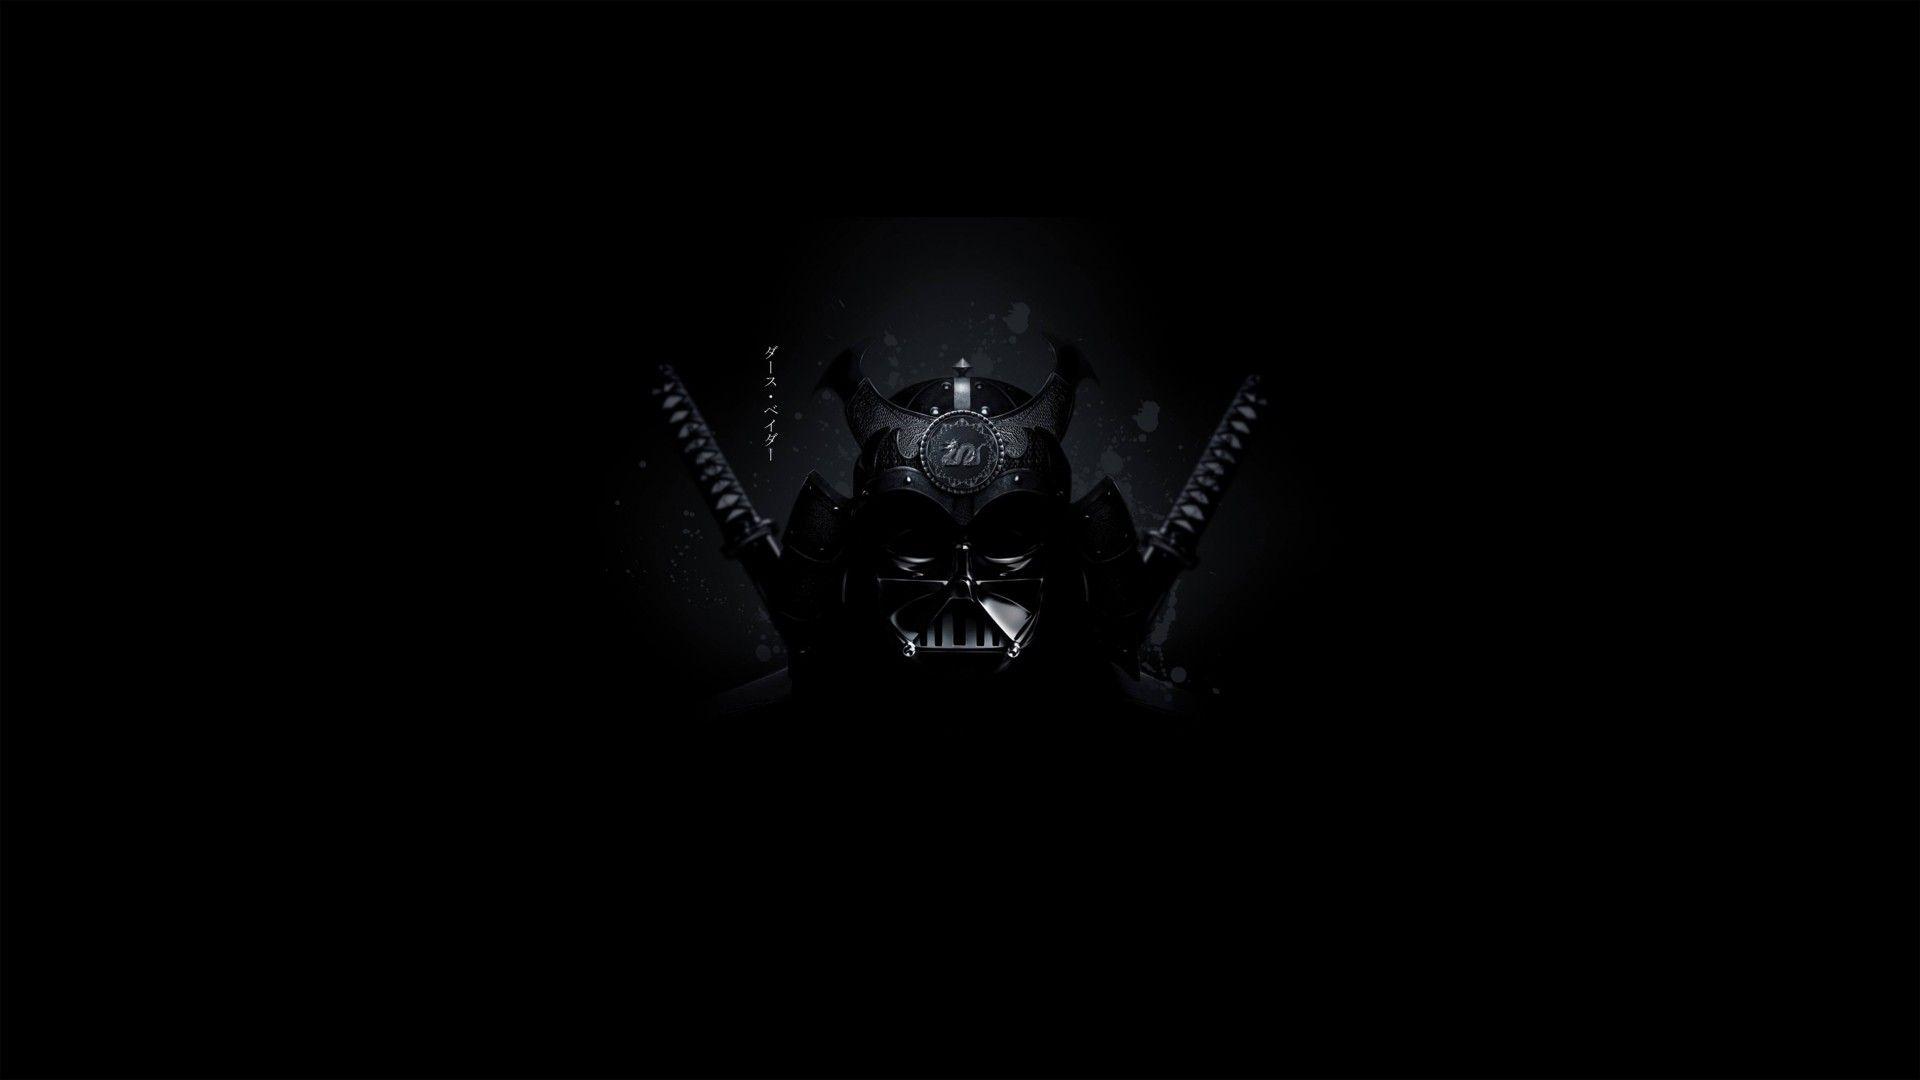 Samurai Darth Vader Wallpaper, Full HD 1080p, Best HD Samurai Darth